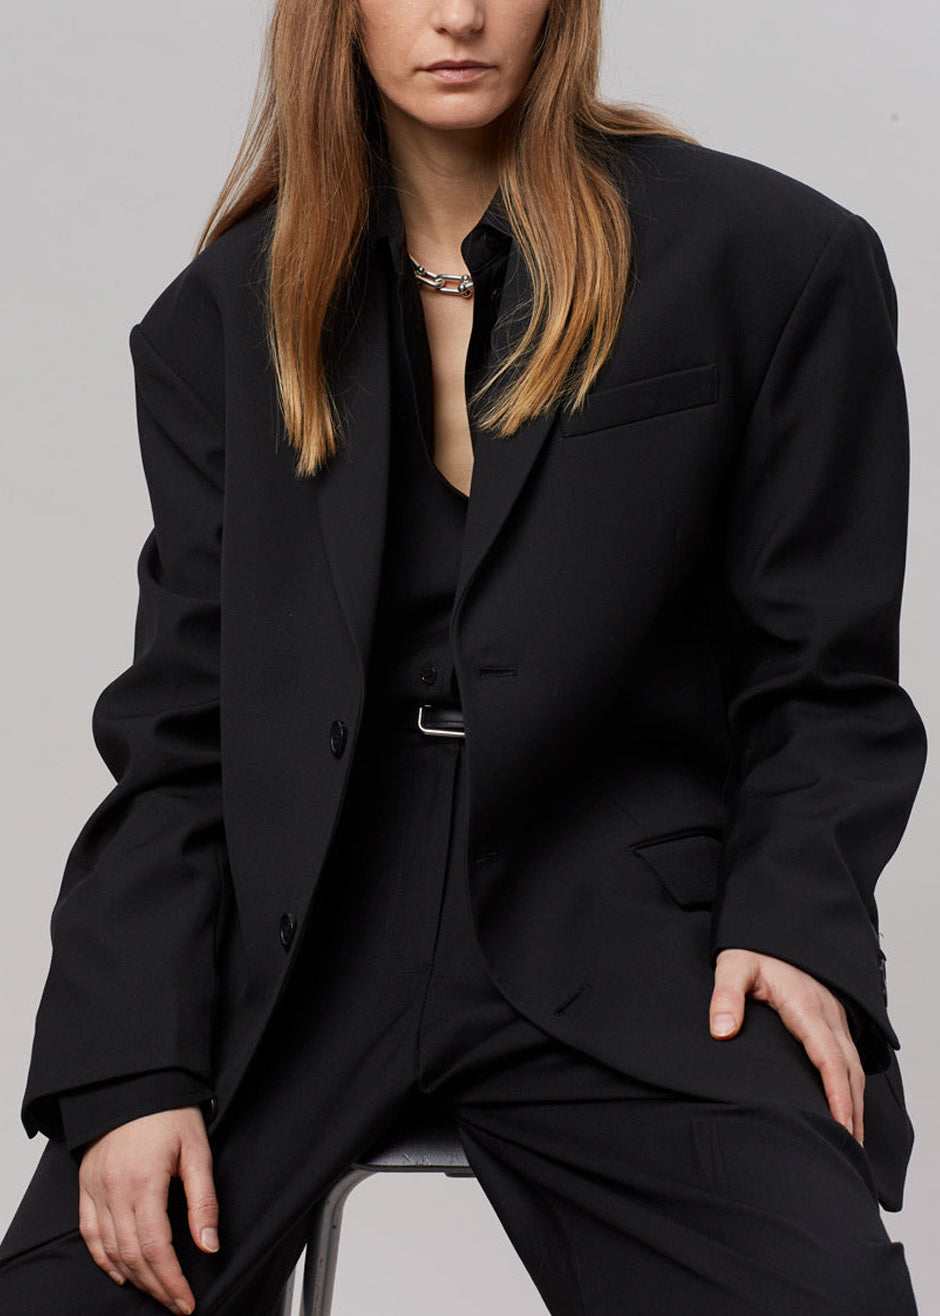 Josephine Chaus Black Blazer Jacket Size 12 